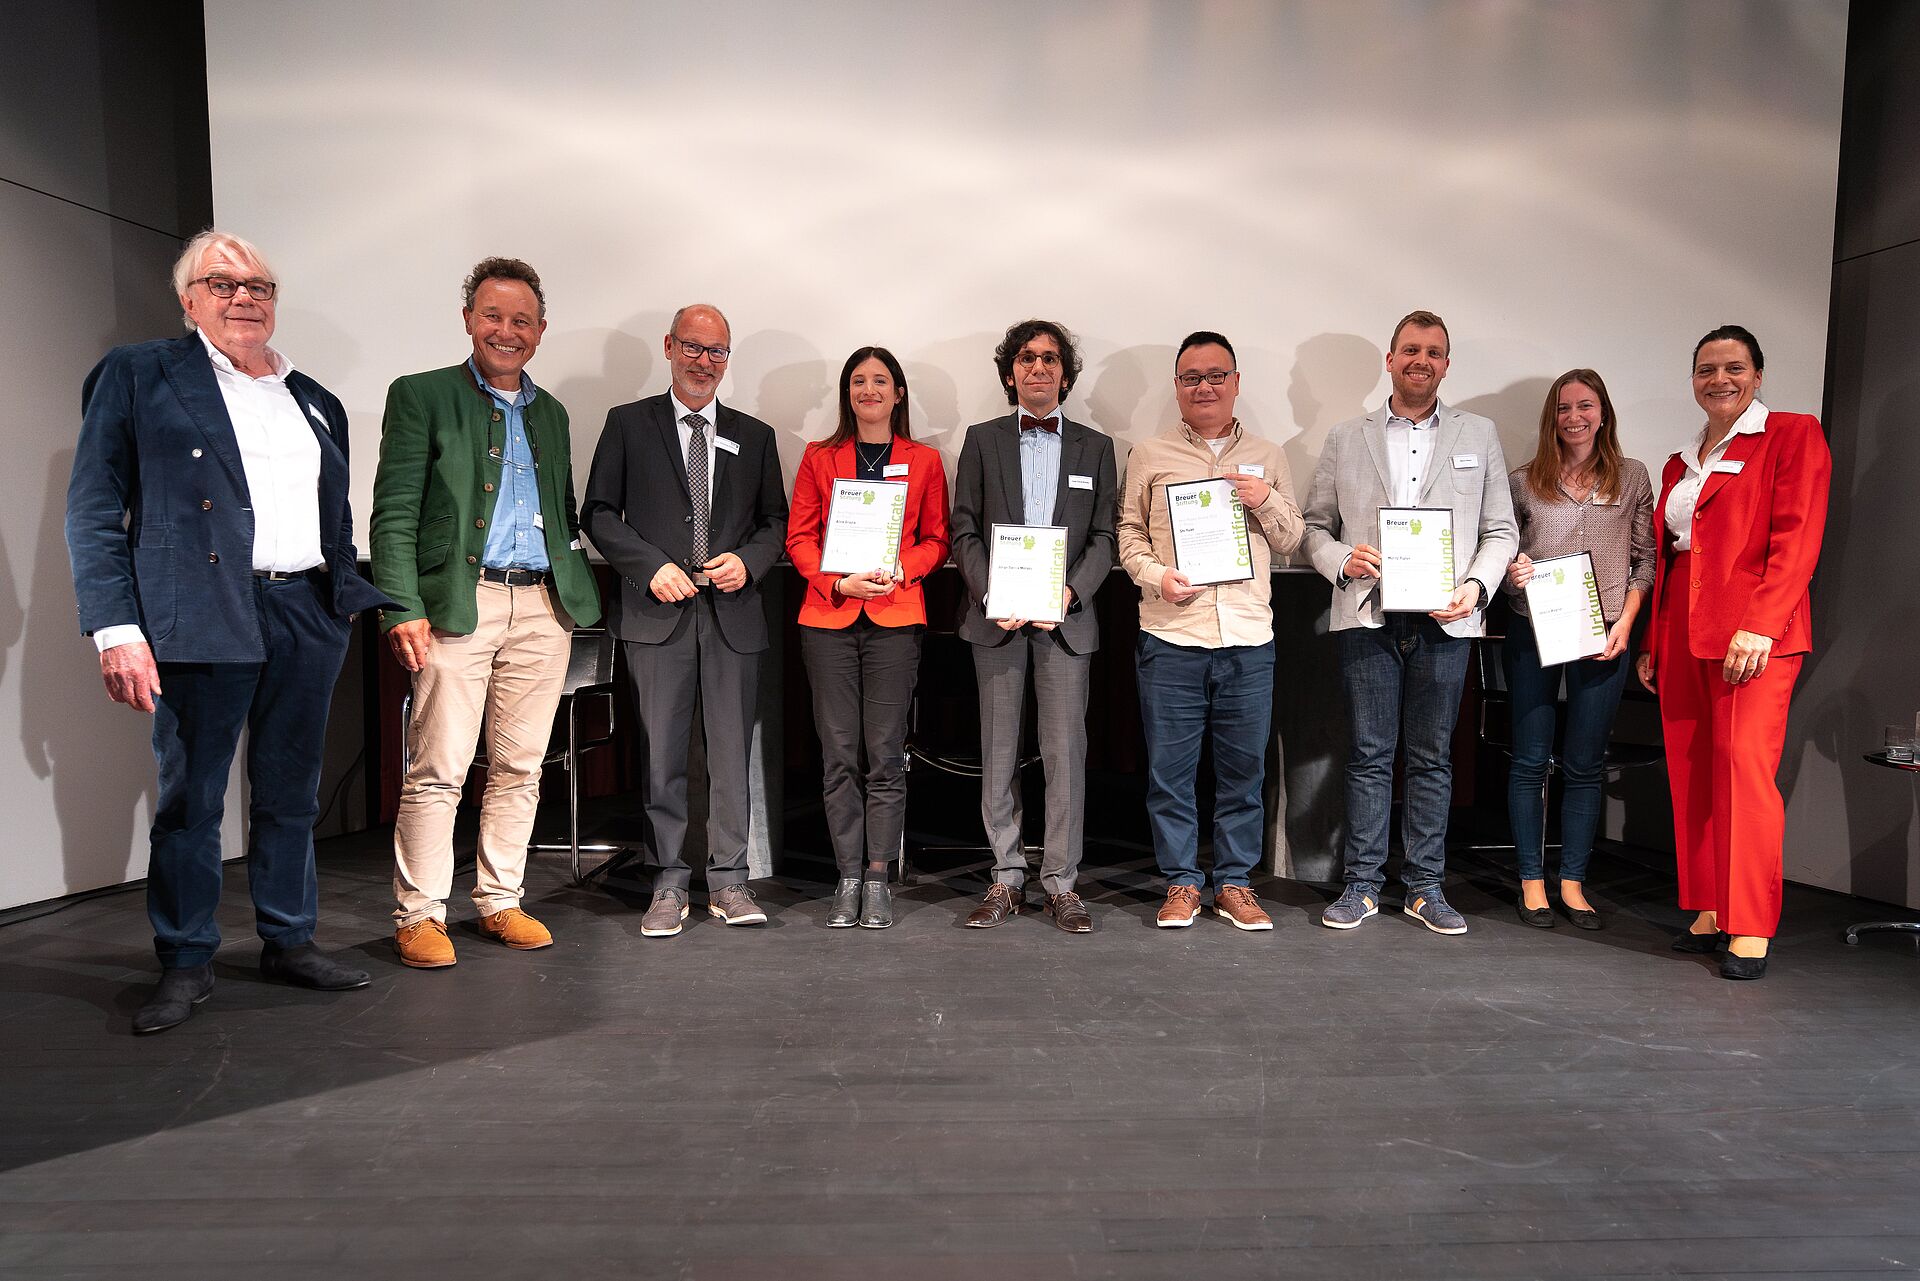 Group photo of the award winners.